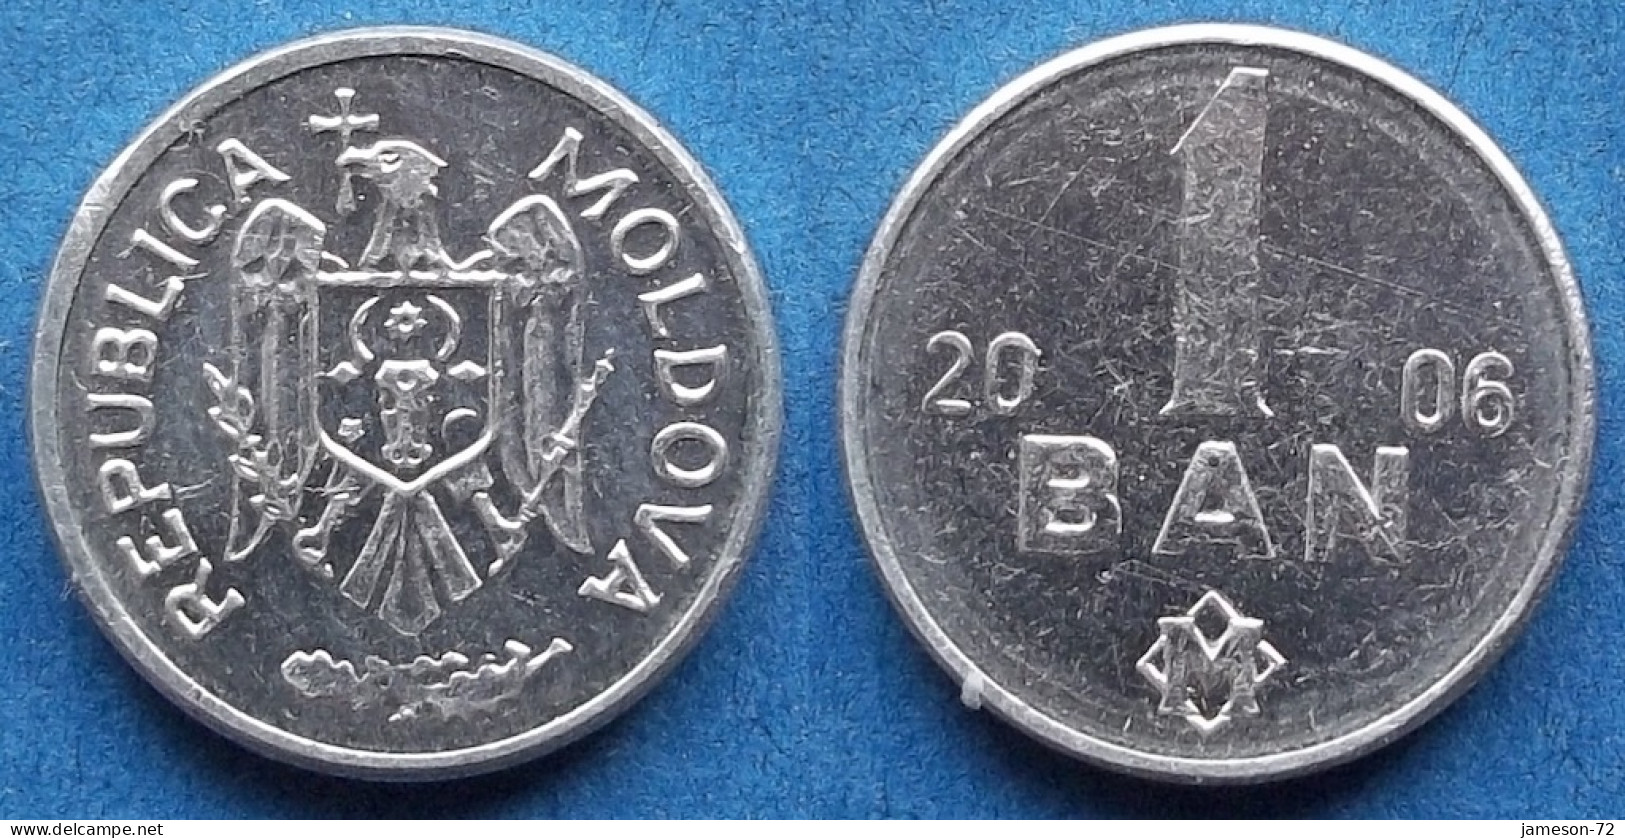 MOLDOVA - 1 Ban 2006 KM# 1 Republic (1991) - Edelweiss Coins - Moldavia